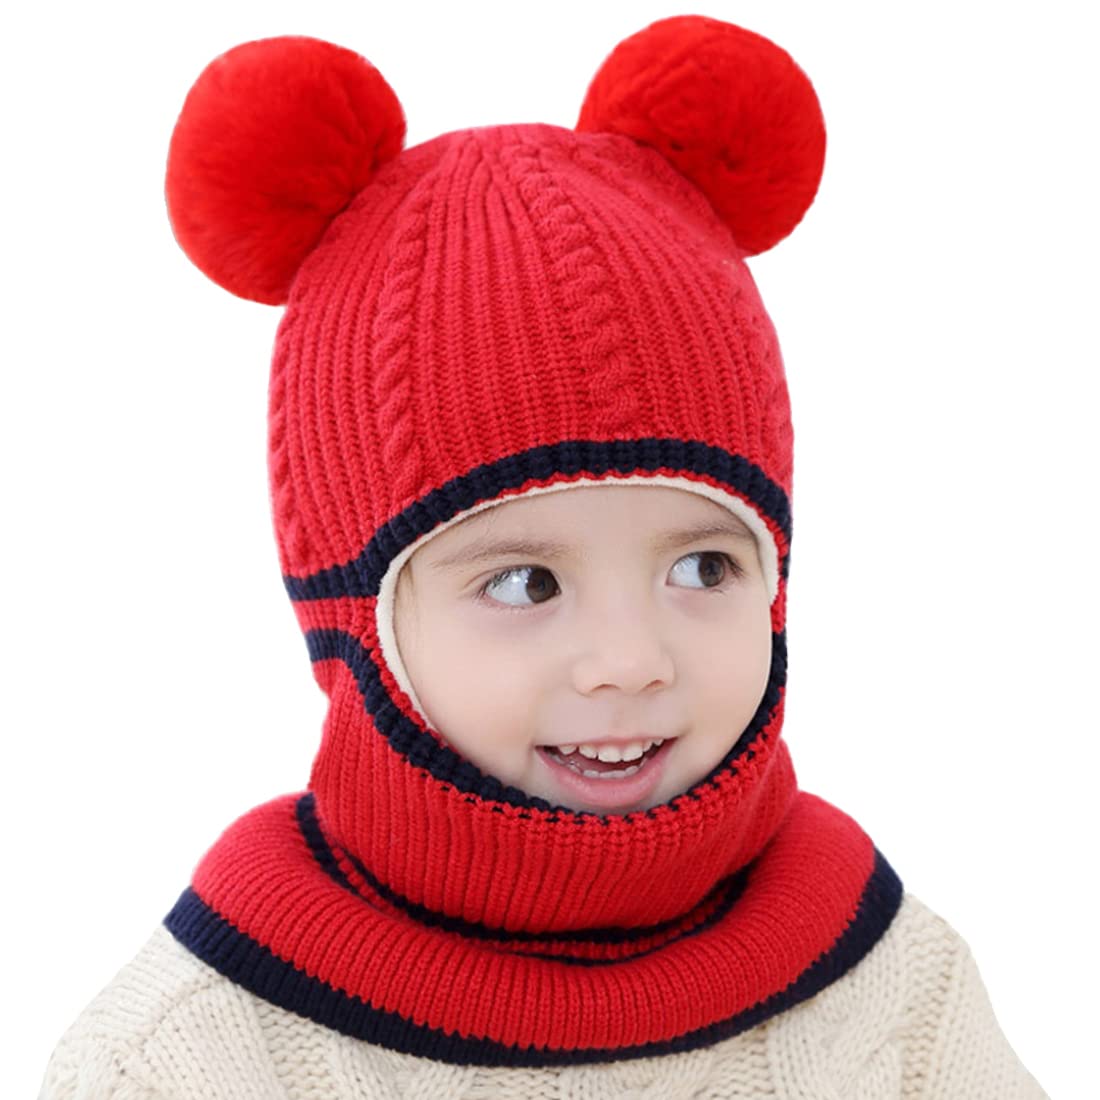 Bonvince Toddler Winter Hat, Baby Winter Hat, Fleece Lined Girls Boys Winter Hat, Kids Winter Hat Scarf Earflap Hood Skull Caps, 6-24M (B